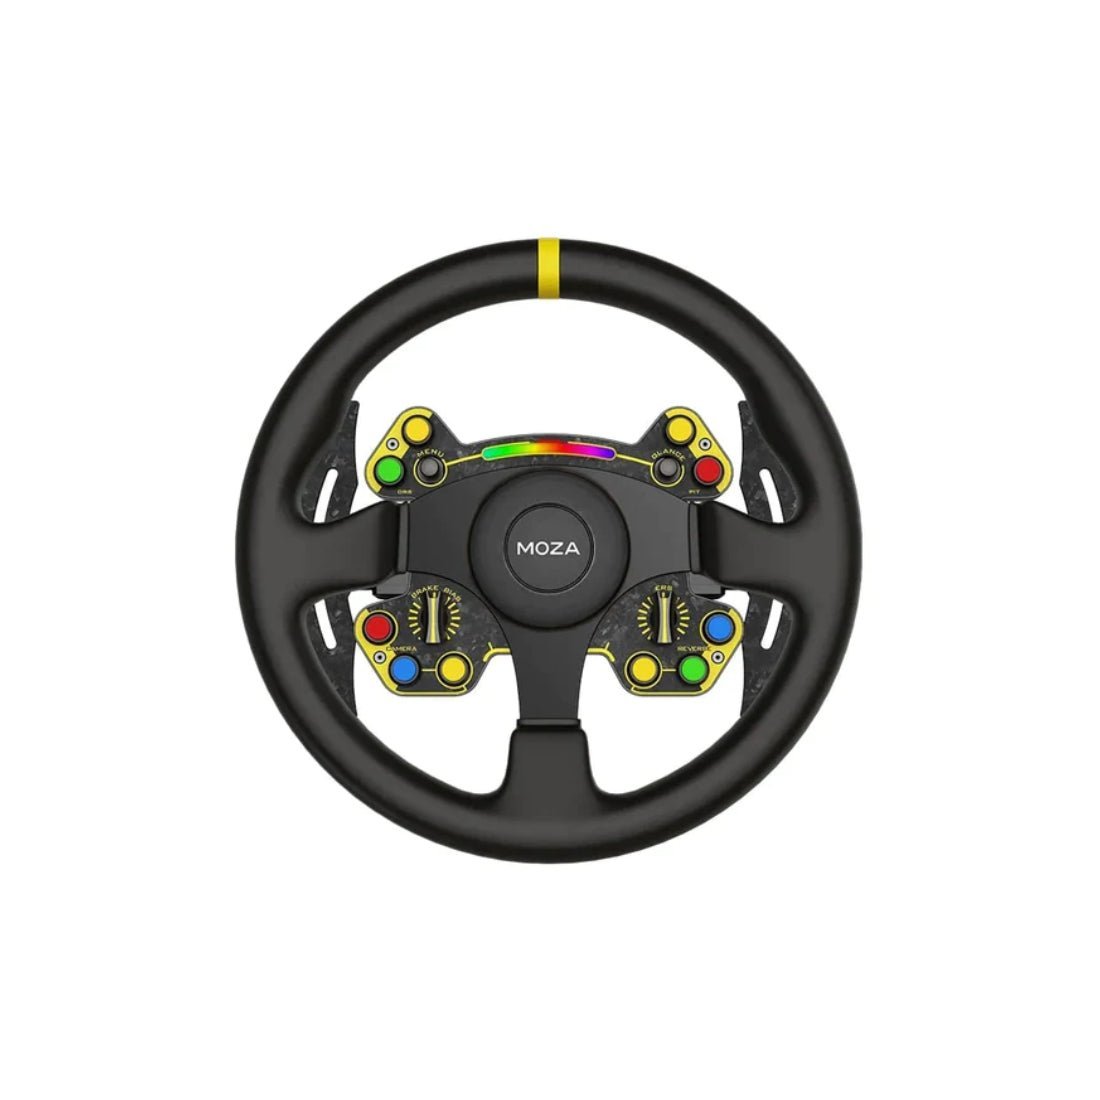 Moza RS Racing Steering Wheel - Black - مقود محاكاة - Store 974 | ستور ٩٧٤